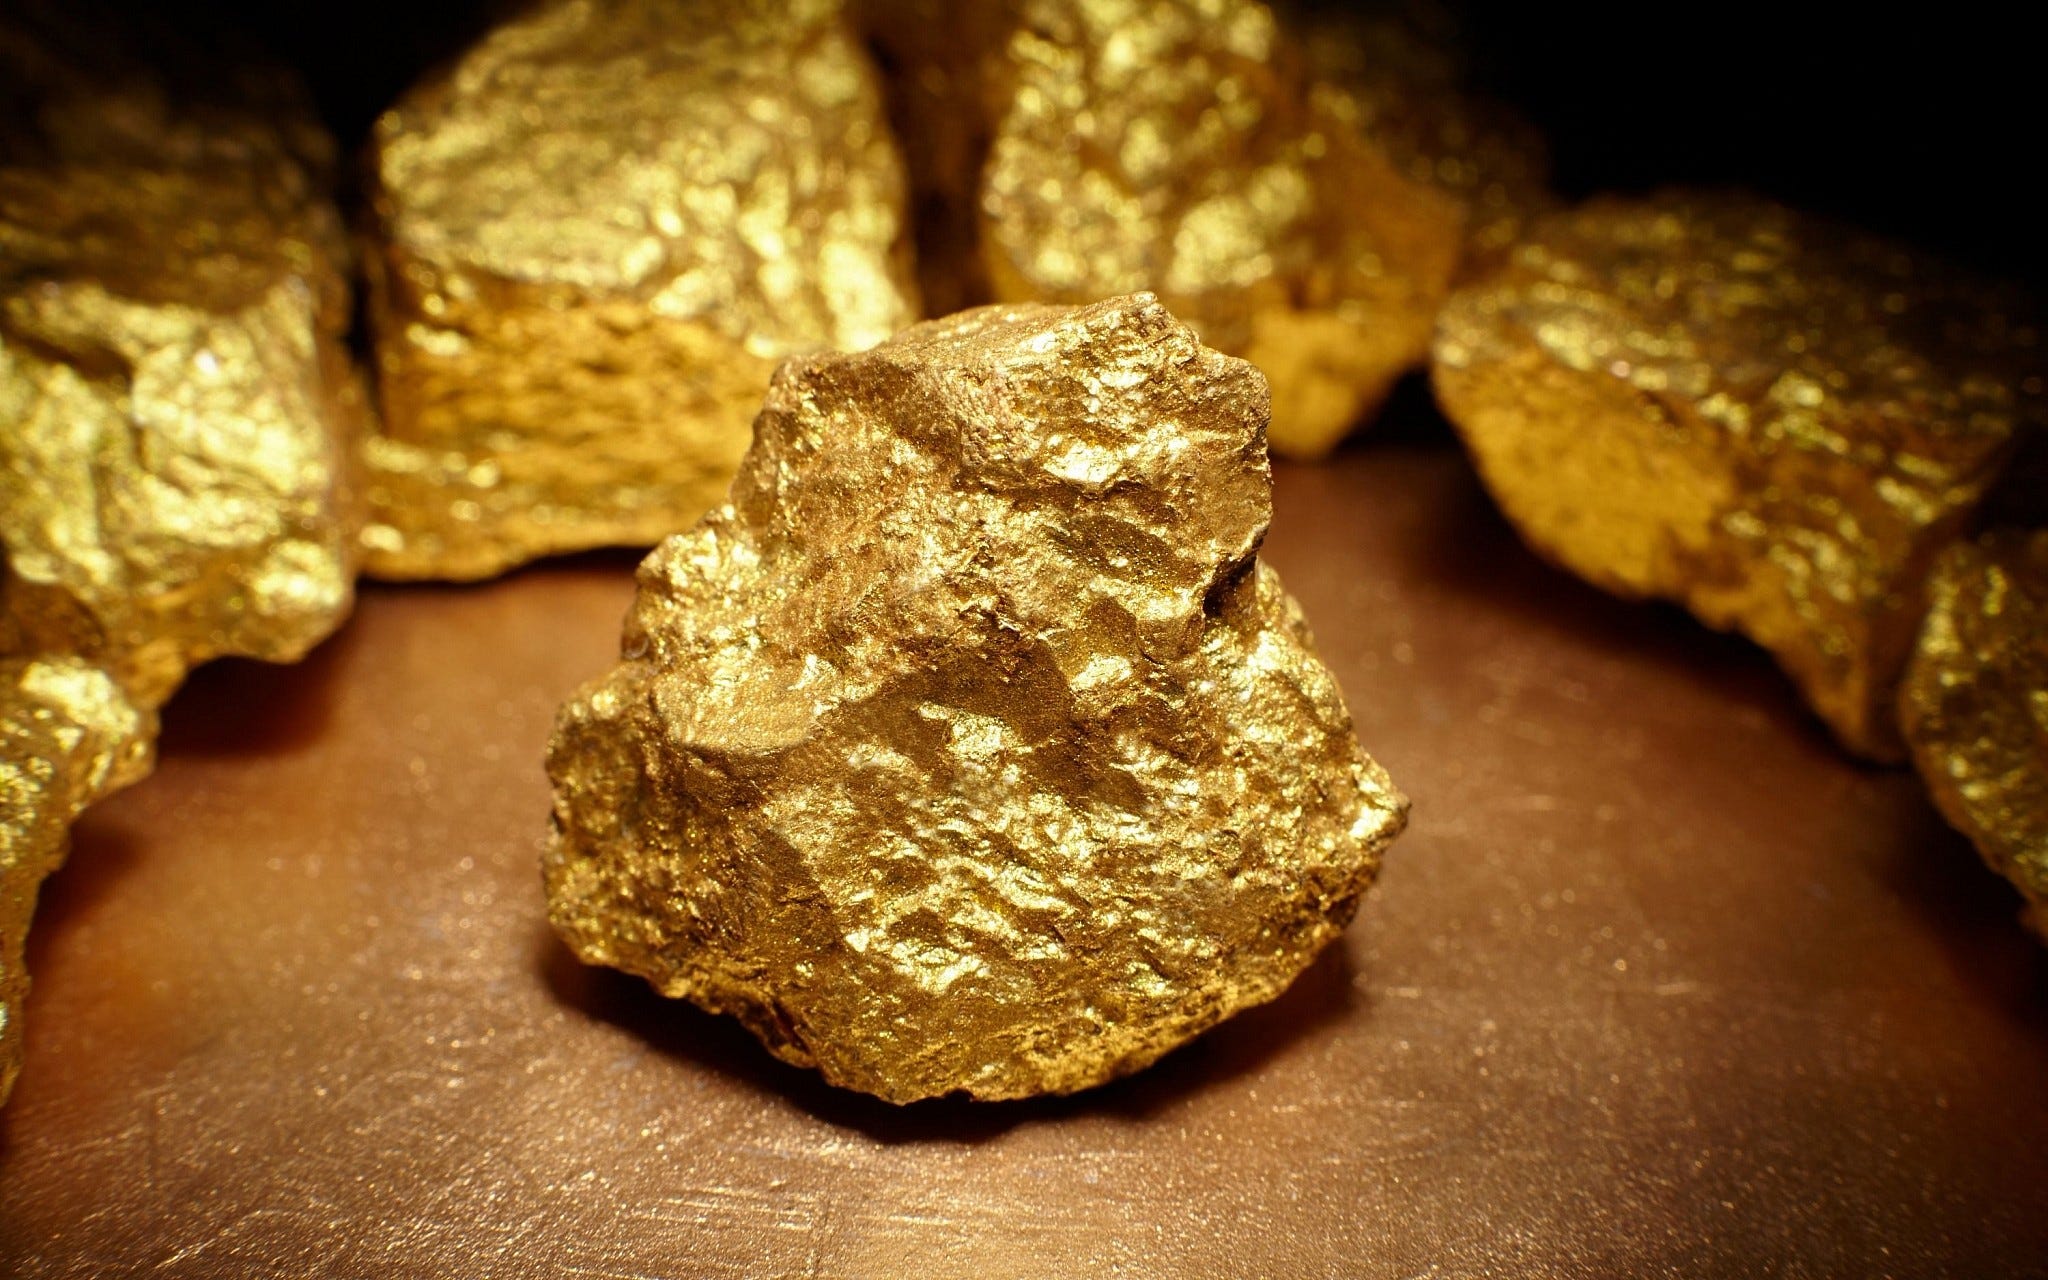 Gold Diggins Gold Rush Activity Kit